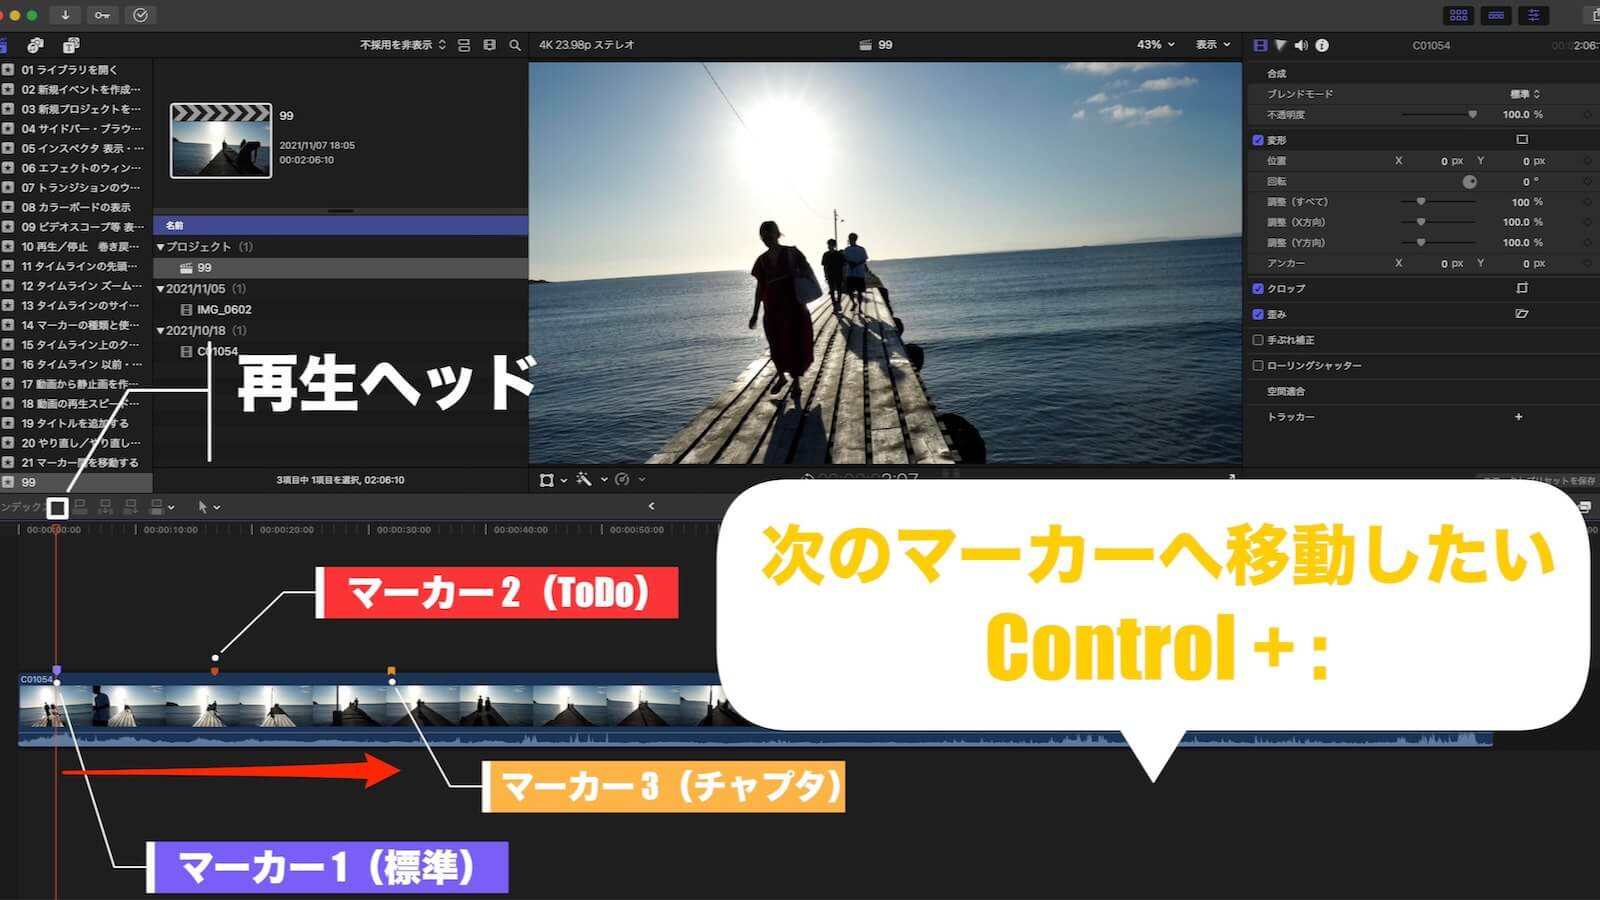 Final Cut Pro Shortcut key to move to the next marker Control +: Description image